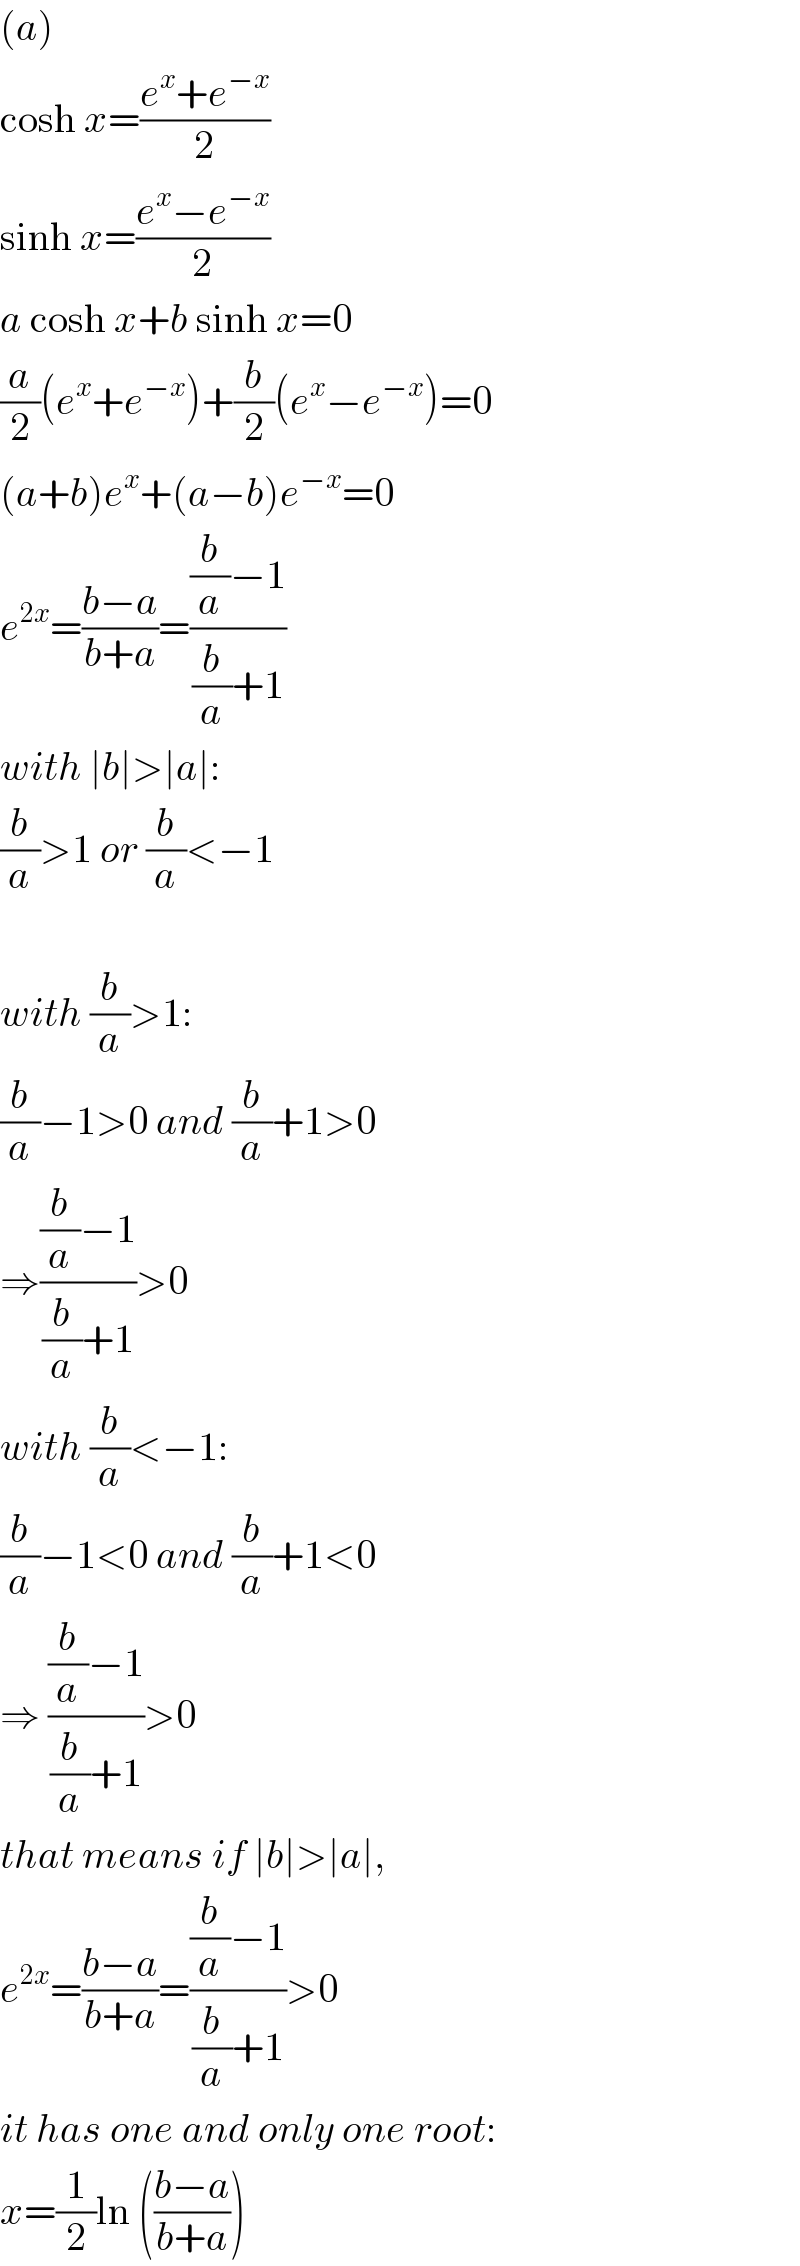 (a)  cosh x=((e^x +e^(−x) )/2)  sinh x=((e^x −e^(−x) )/2)  a cosh x+b sinh x=0  (a/2)(e^x +e^(−x) )+(b/2)(e^x −e^(−x) )=0  (a+b)e^x +(a−b)e^(−x) =0  e^(2x) =((b−a)/(b+a))=(((b/a)−1)/((b/a)+1))  with ∣b∣>∣a∣:  (b/a)>1 or (b/a)<−1    with (b/a)>1:    (b/a)−1>0 and (b/a)+1>0  ⇒(((b/a)−1)/((b/a)+1))>0  with (b/a)<−1:   (b/a)−1<0 and (b/a)+1<0  ⇒ (((b/a)−1)/((b/a)+1))>0  that means if ∣b∣>∣a∣,  e^(2x) =((b−a)/(b+a))=(((b/a)−1)/((b/a)+1))>0  it has one and only one root:  x=(1/2)ln (((b−a)/(b+a)))  